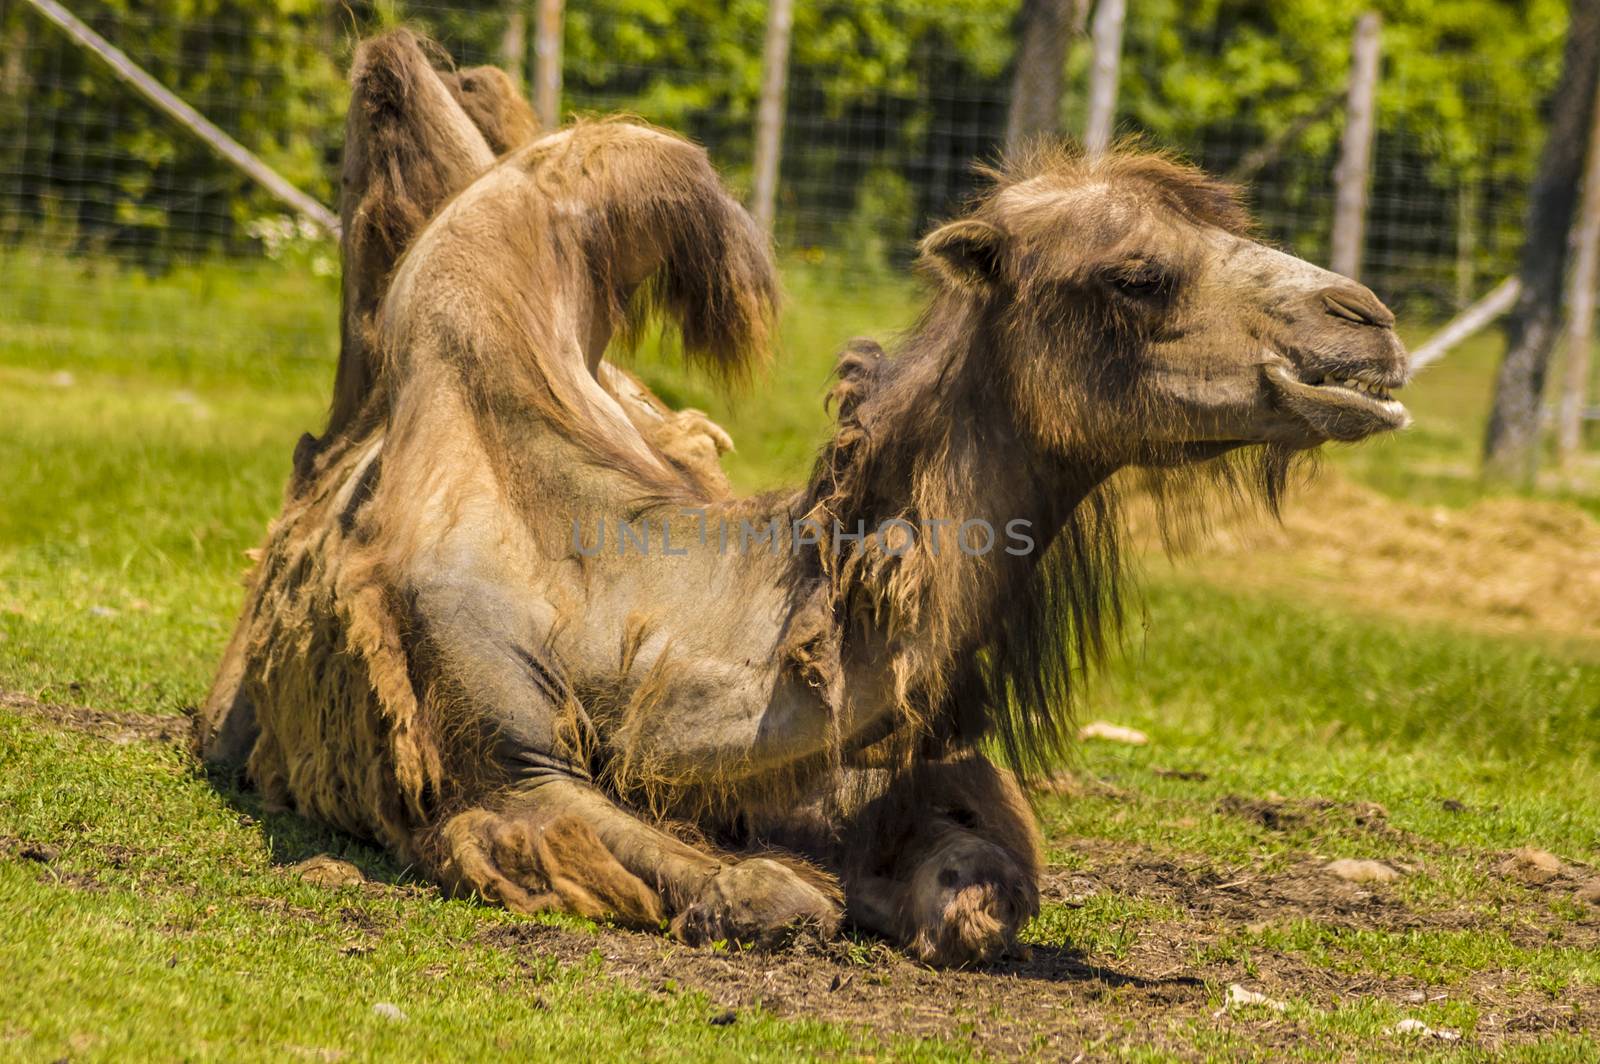 Camel by vladikpod